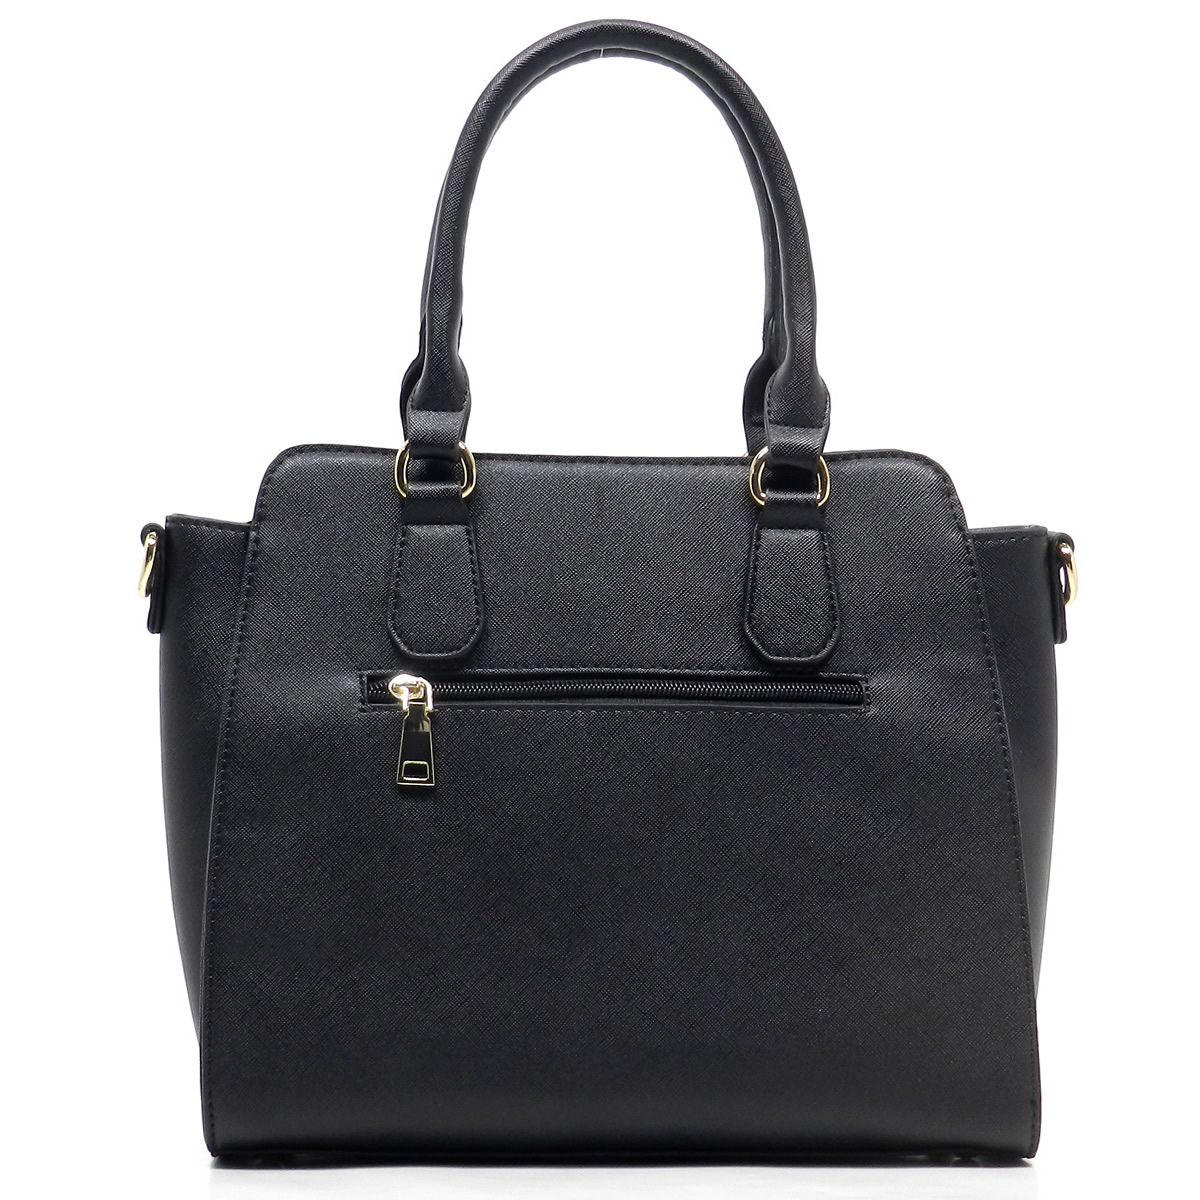 sold out - Fashion Handbags - Onsale Handbag